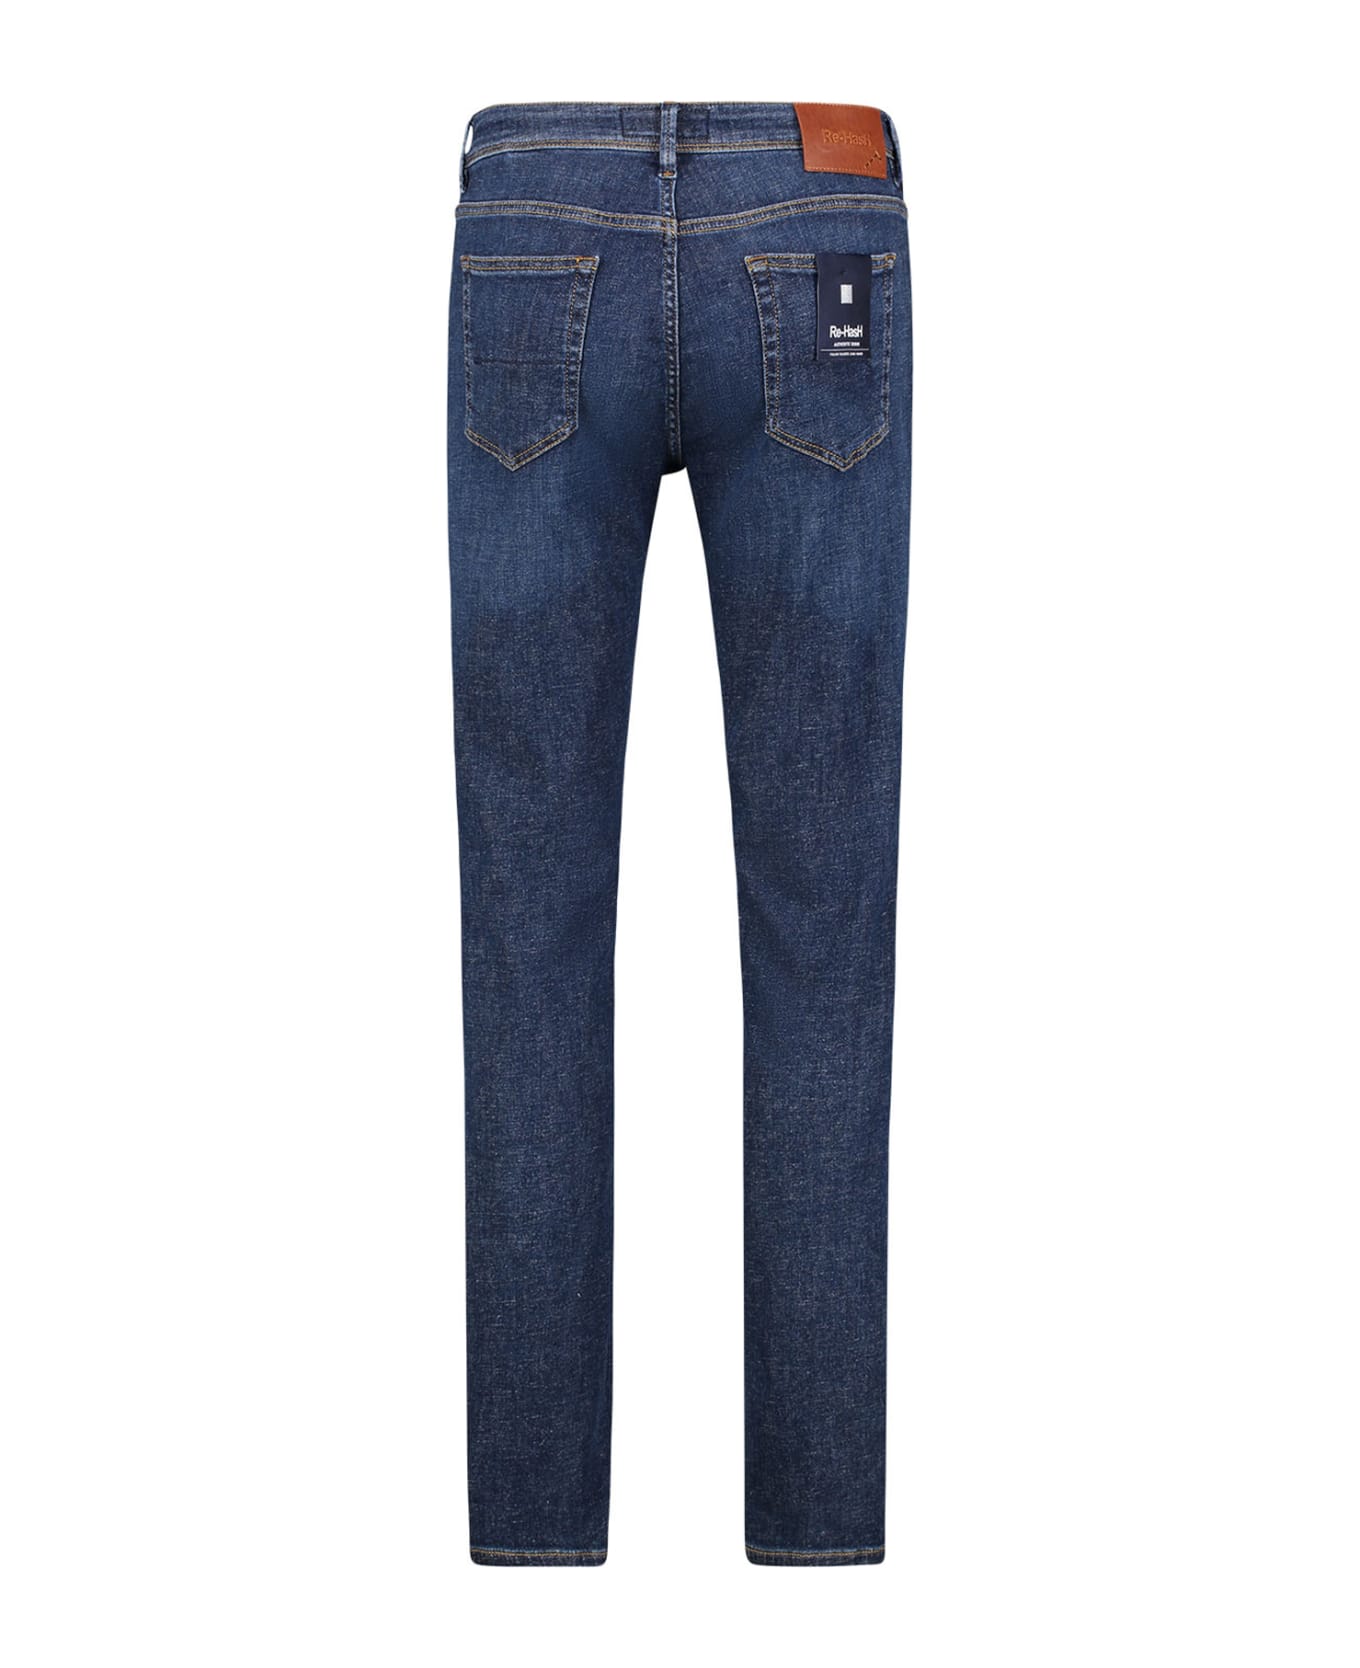 Re-HasH Slim Fit Jeans In Dark Denim - DENIM SCURO